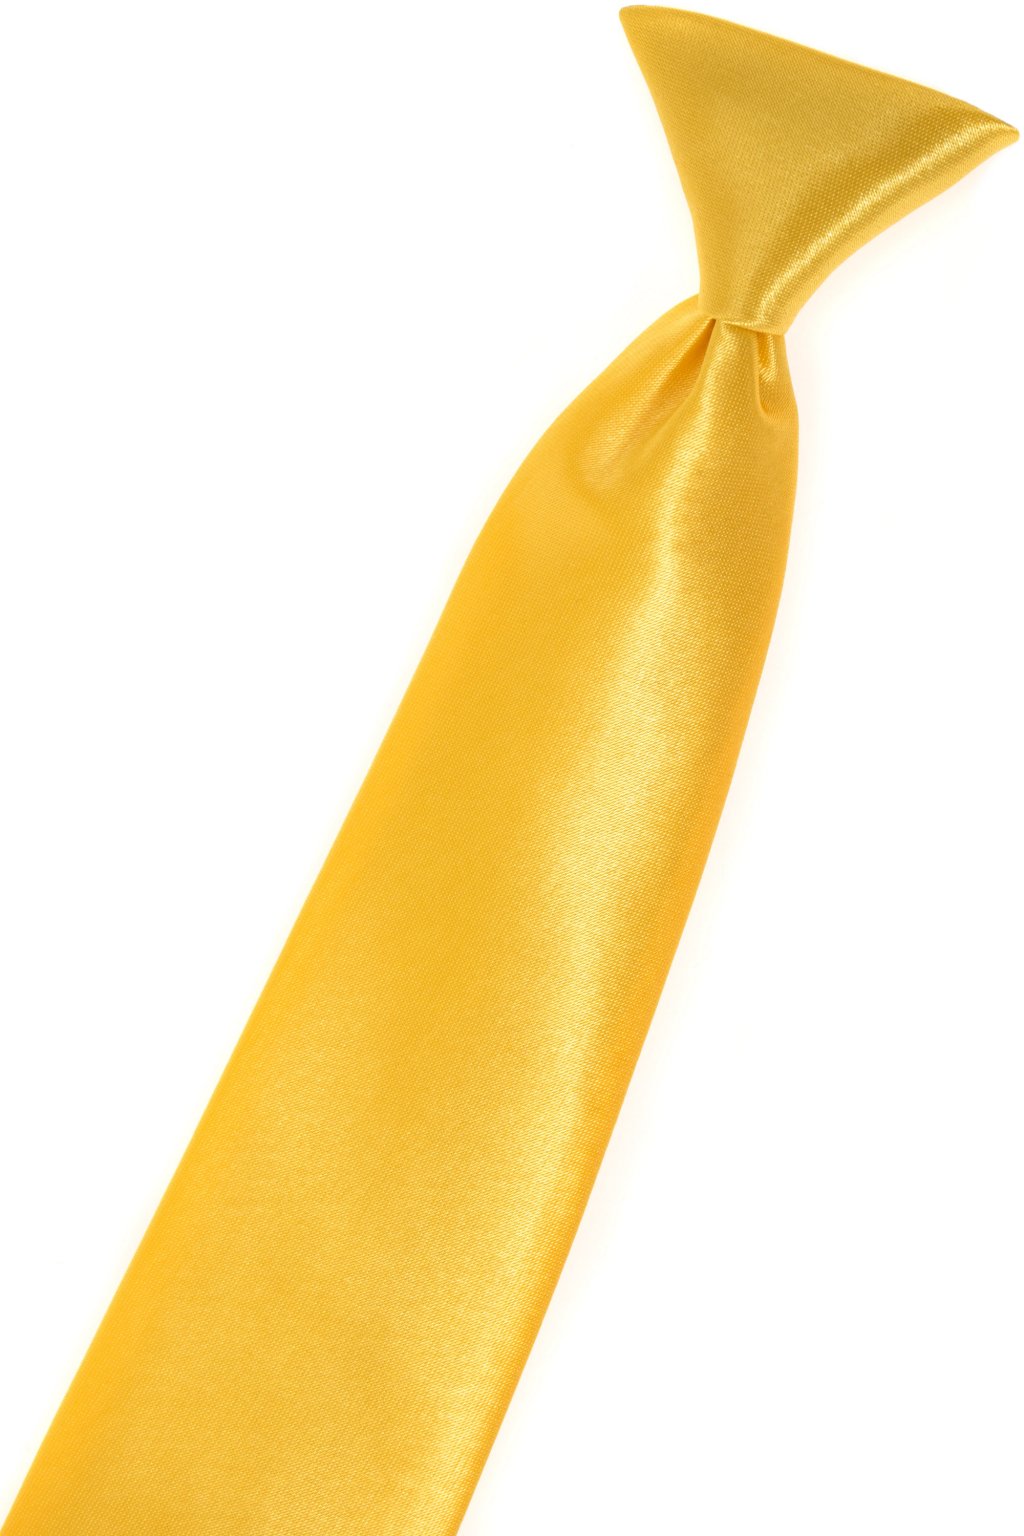 Chlapecká kravata Avantgard - žlutá